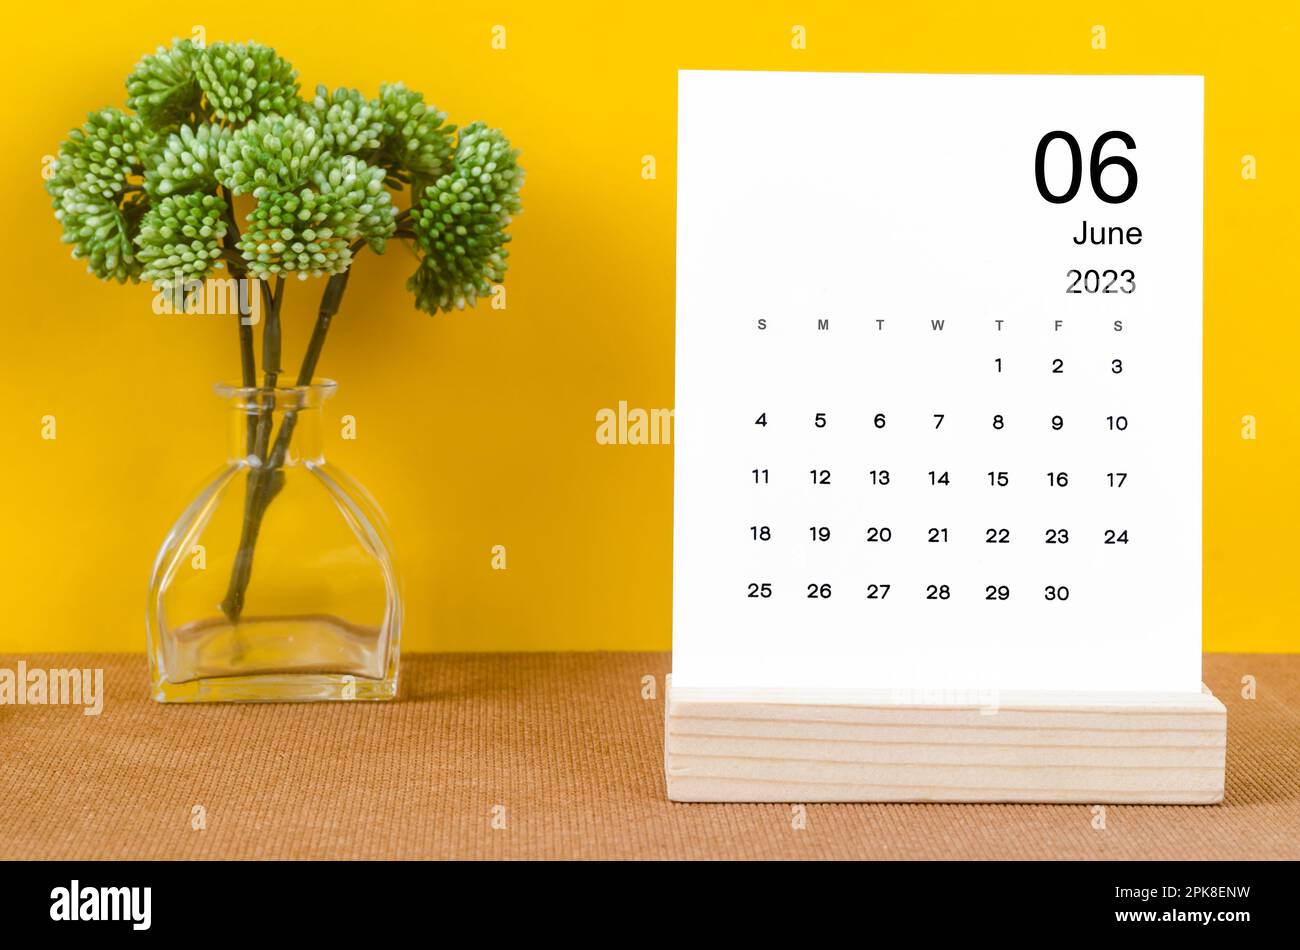 June 2023 Calendar Desktop Wallpaper Background